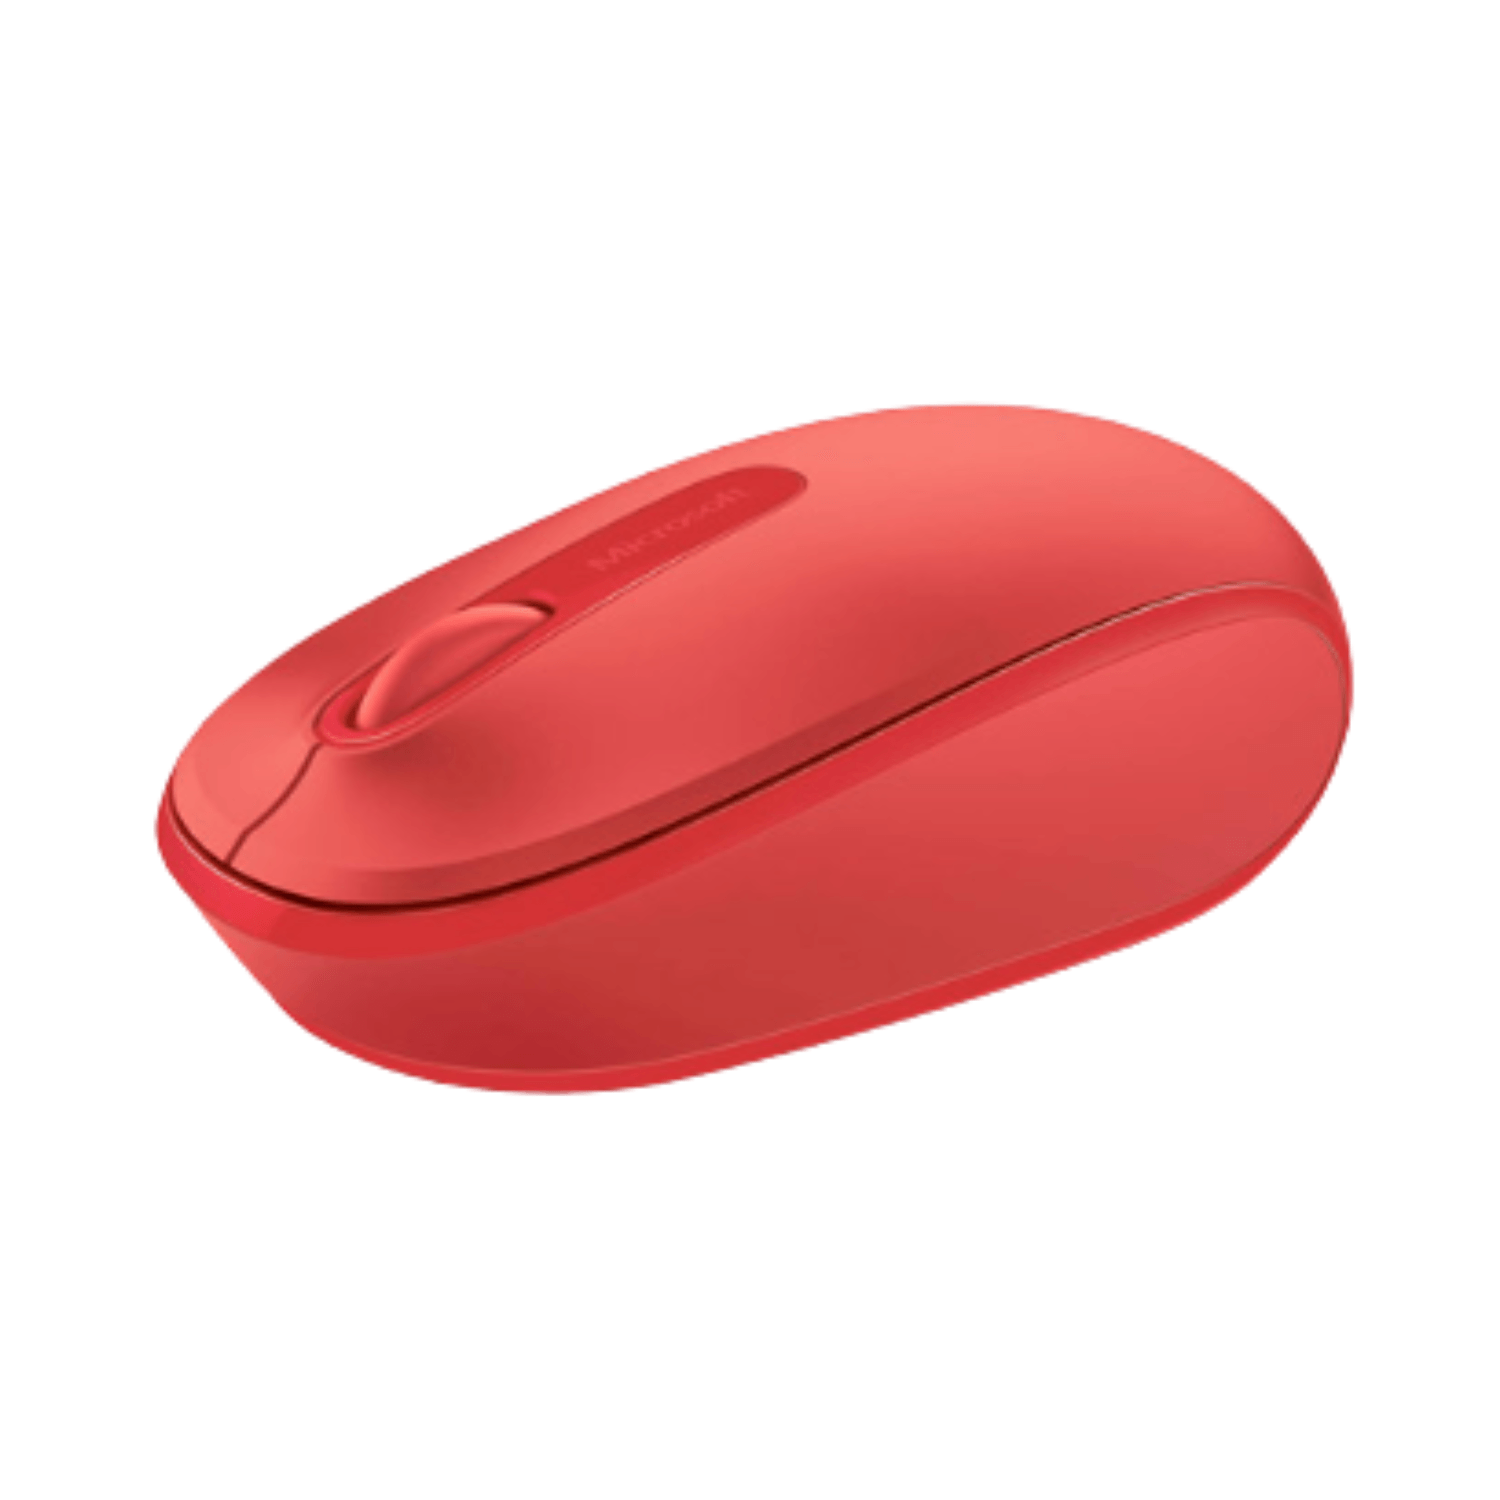 Mouse Inalambrico Color Rojo Microsoft Mobile 1850 Receptor Usb Ergonomico